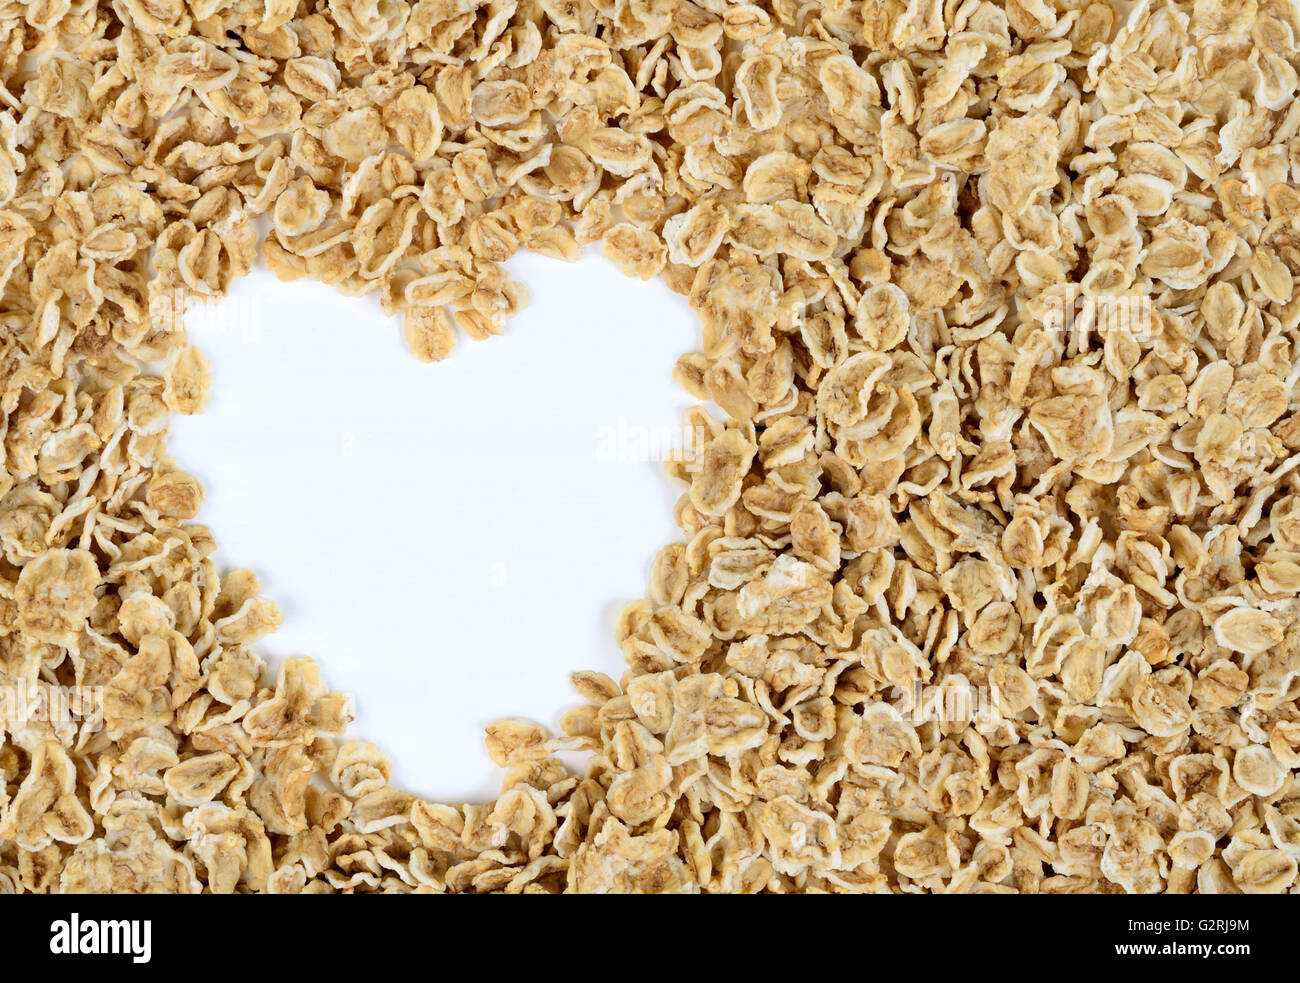 Heart shape of oats heap on table Stock Photo